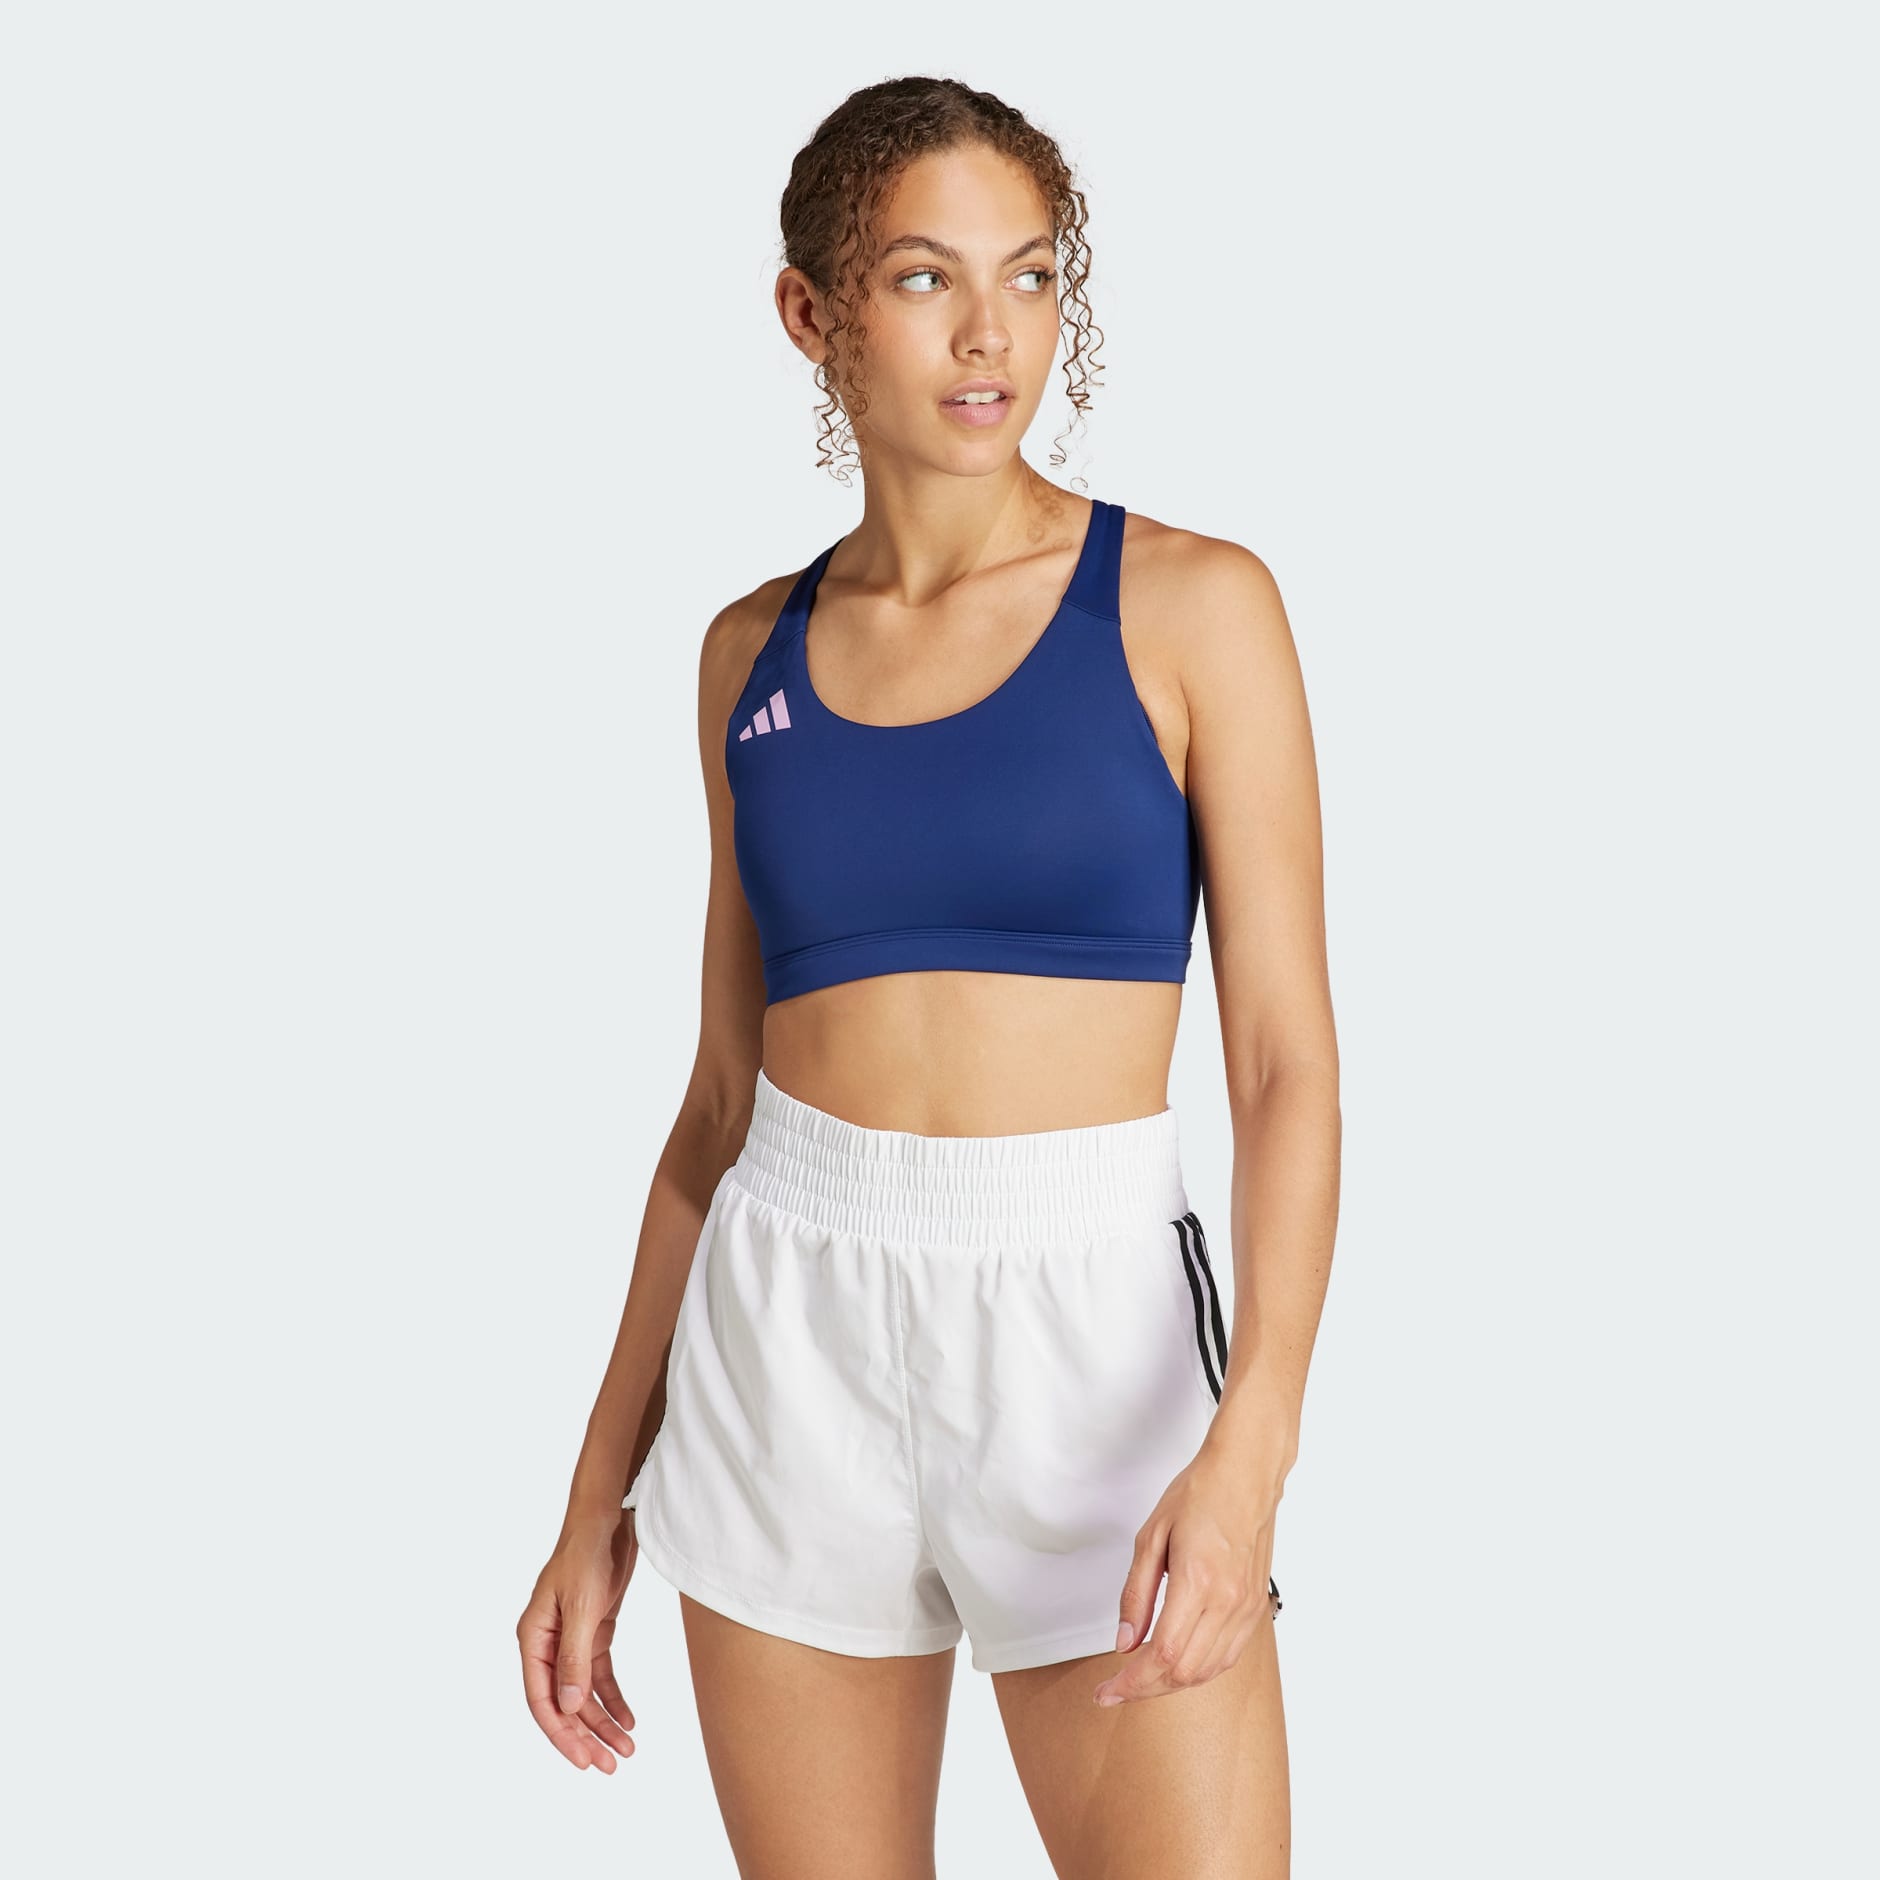 Recycled medium support sports bra, navy blue, Adidas Performance